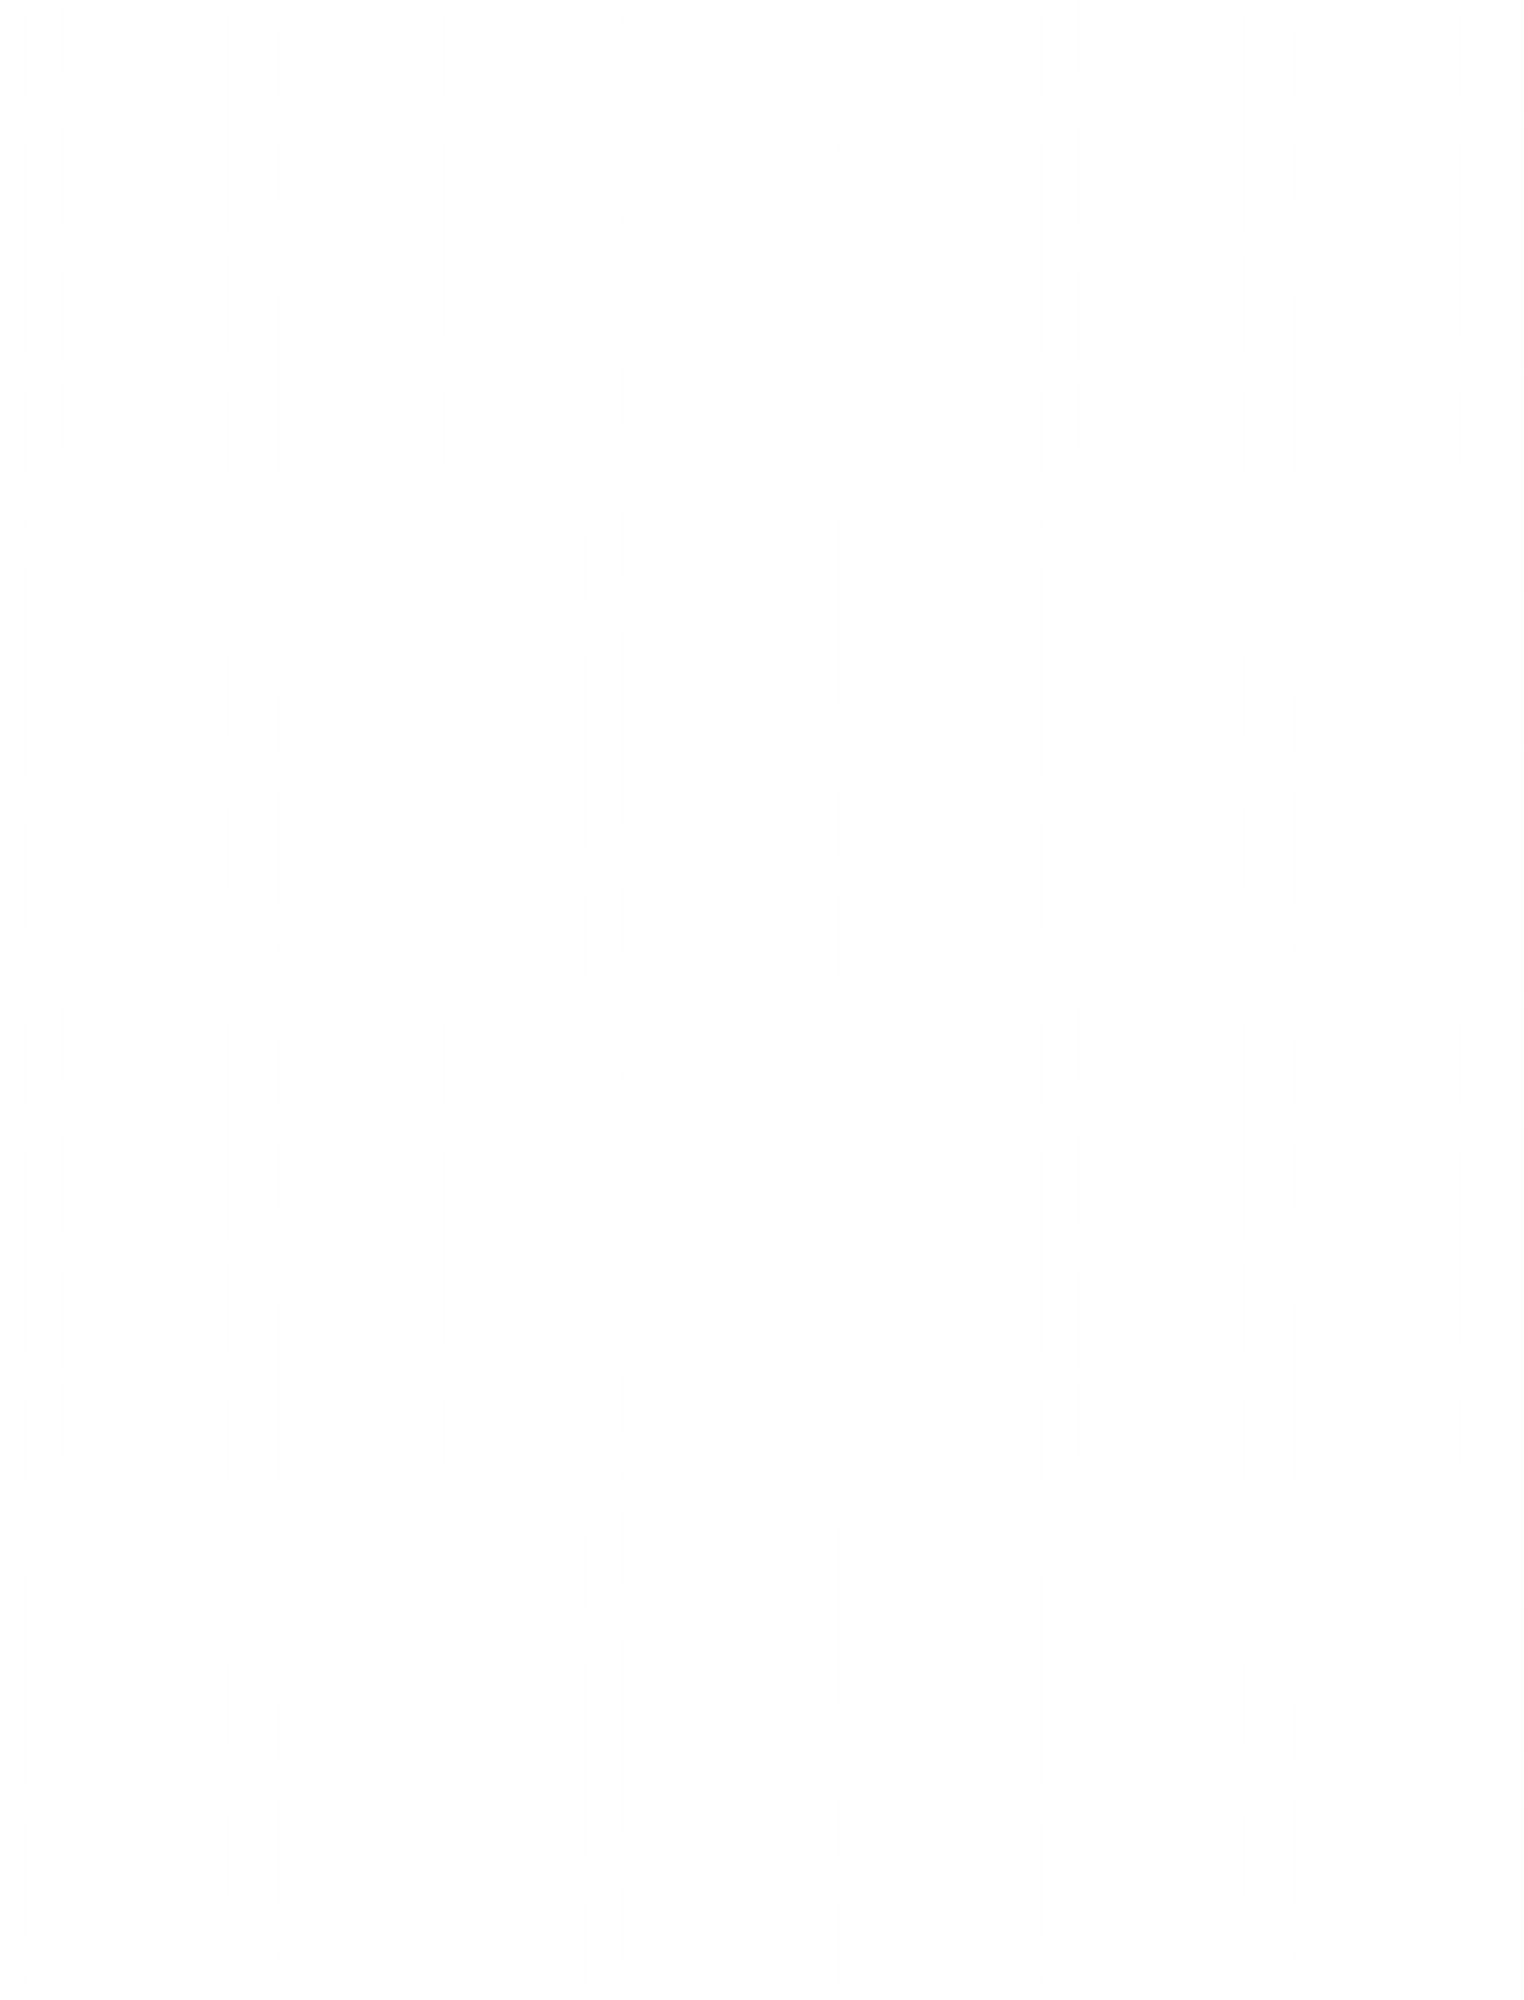 Backgrounds - Labyrinth Maze Pattern - White